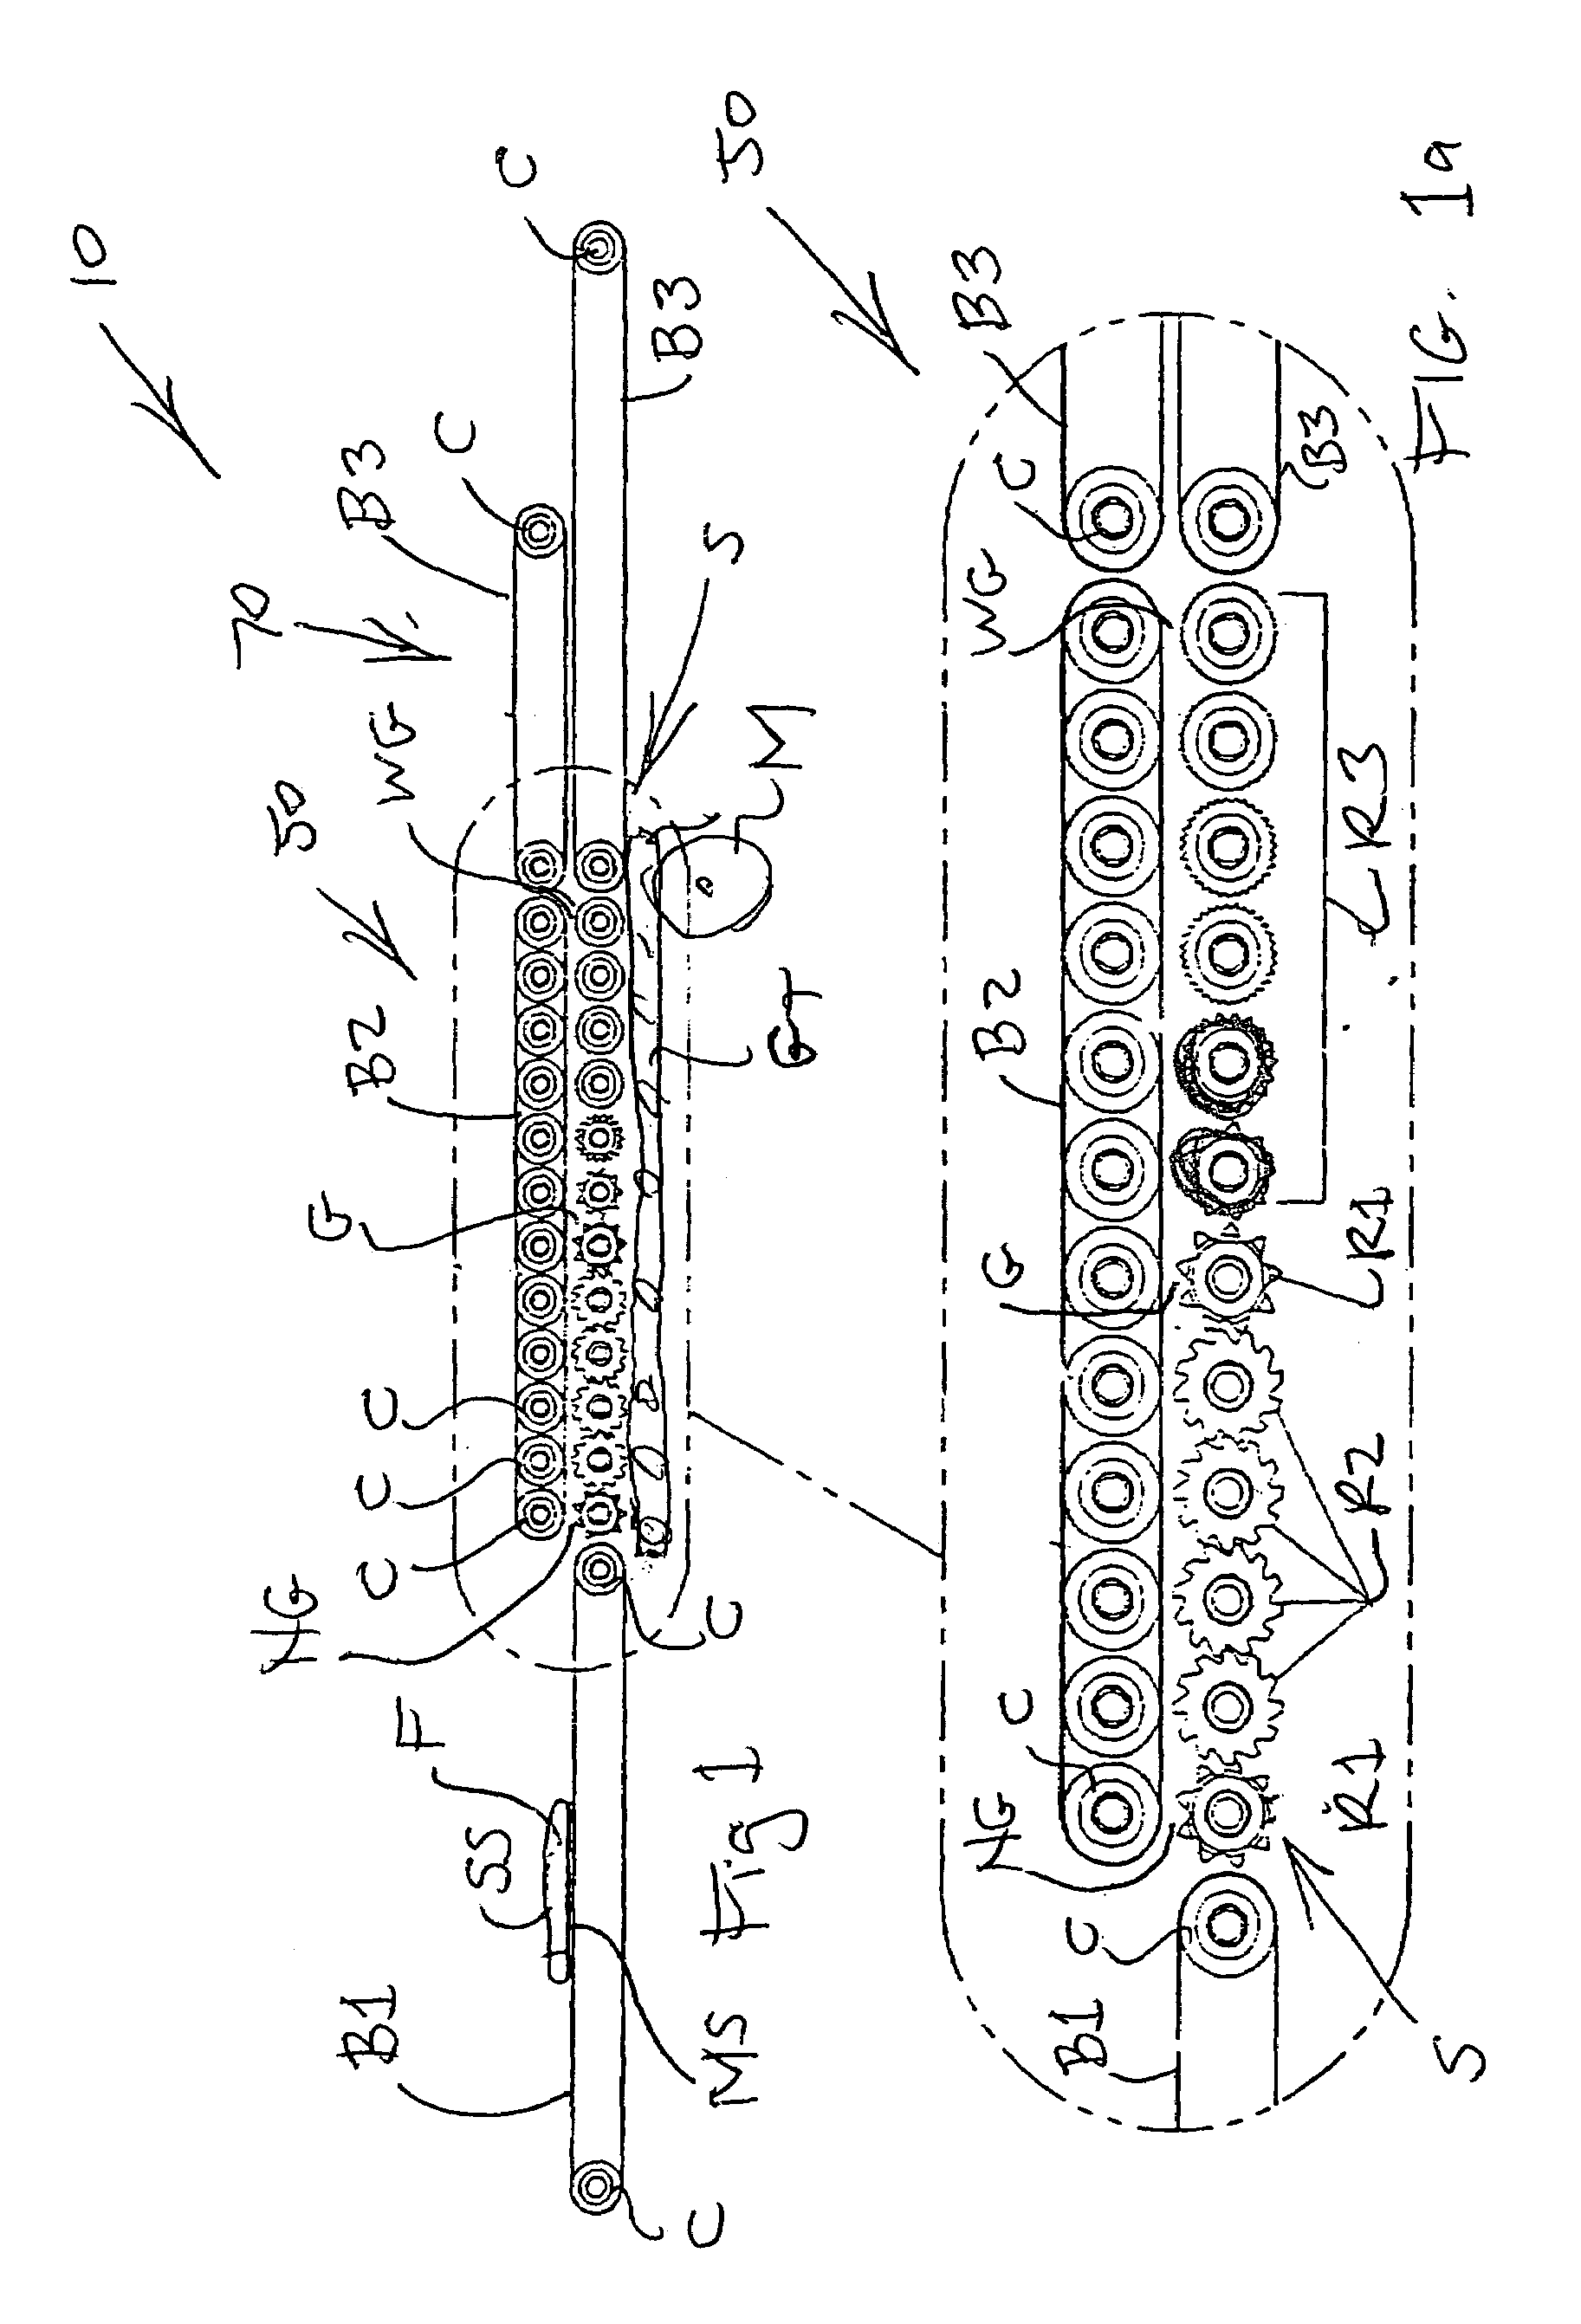 Belt and roller flattening apparatus